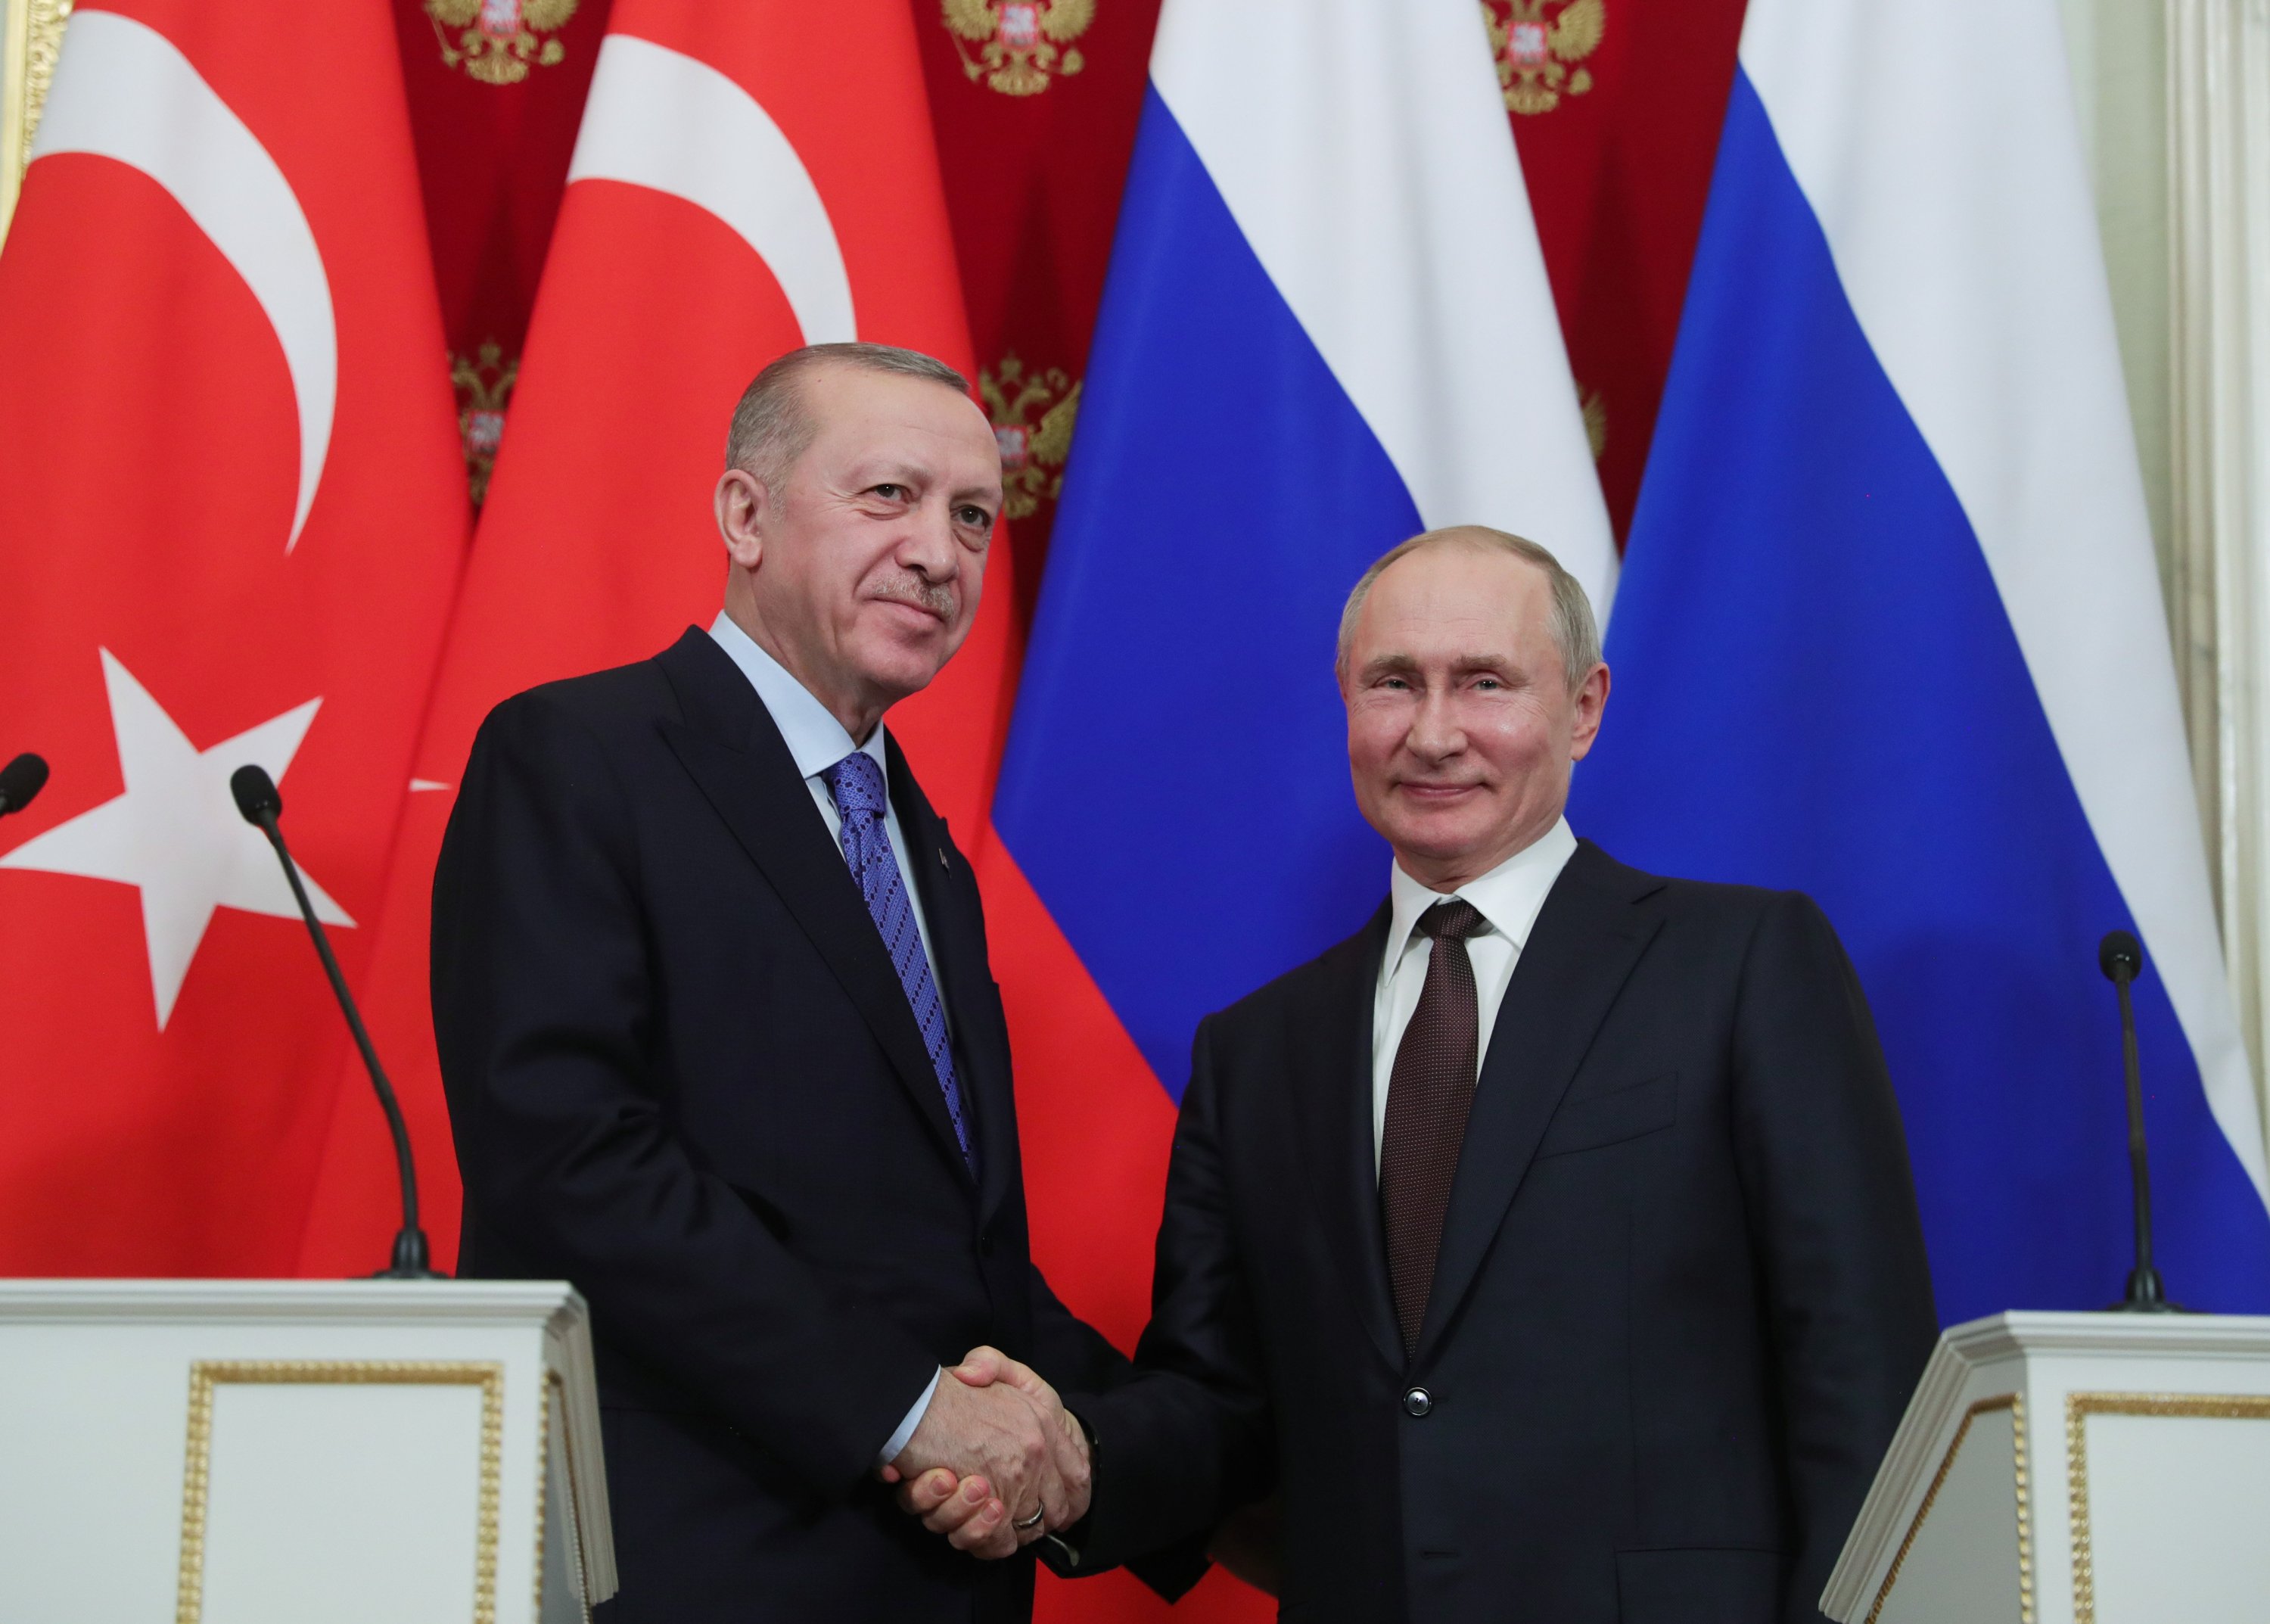 Erdoğan, Putin discuss bilateral ties, pandemic, region | Daily Sabah